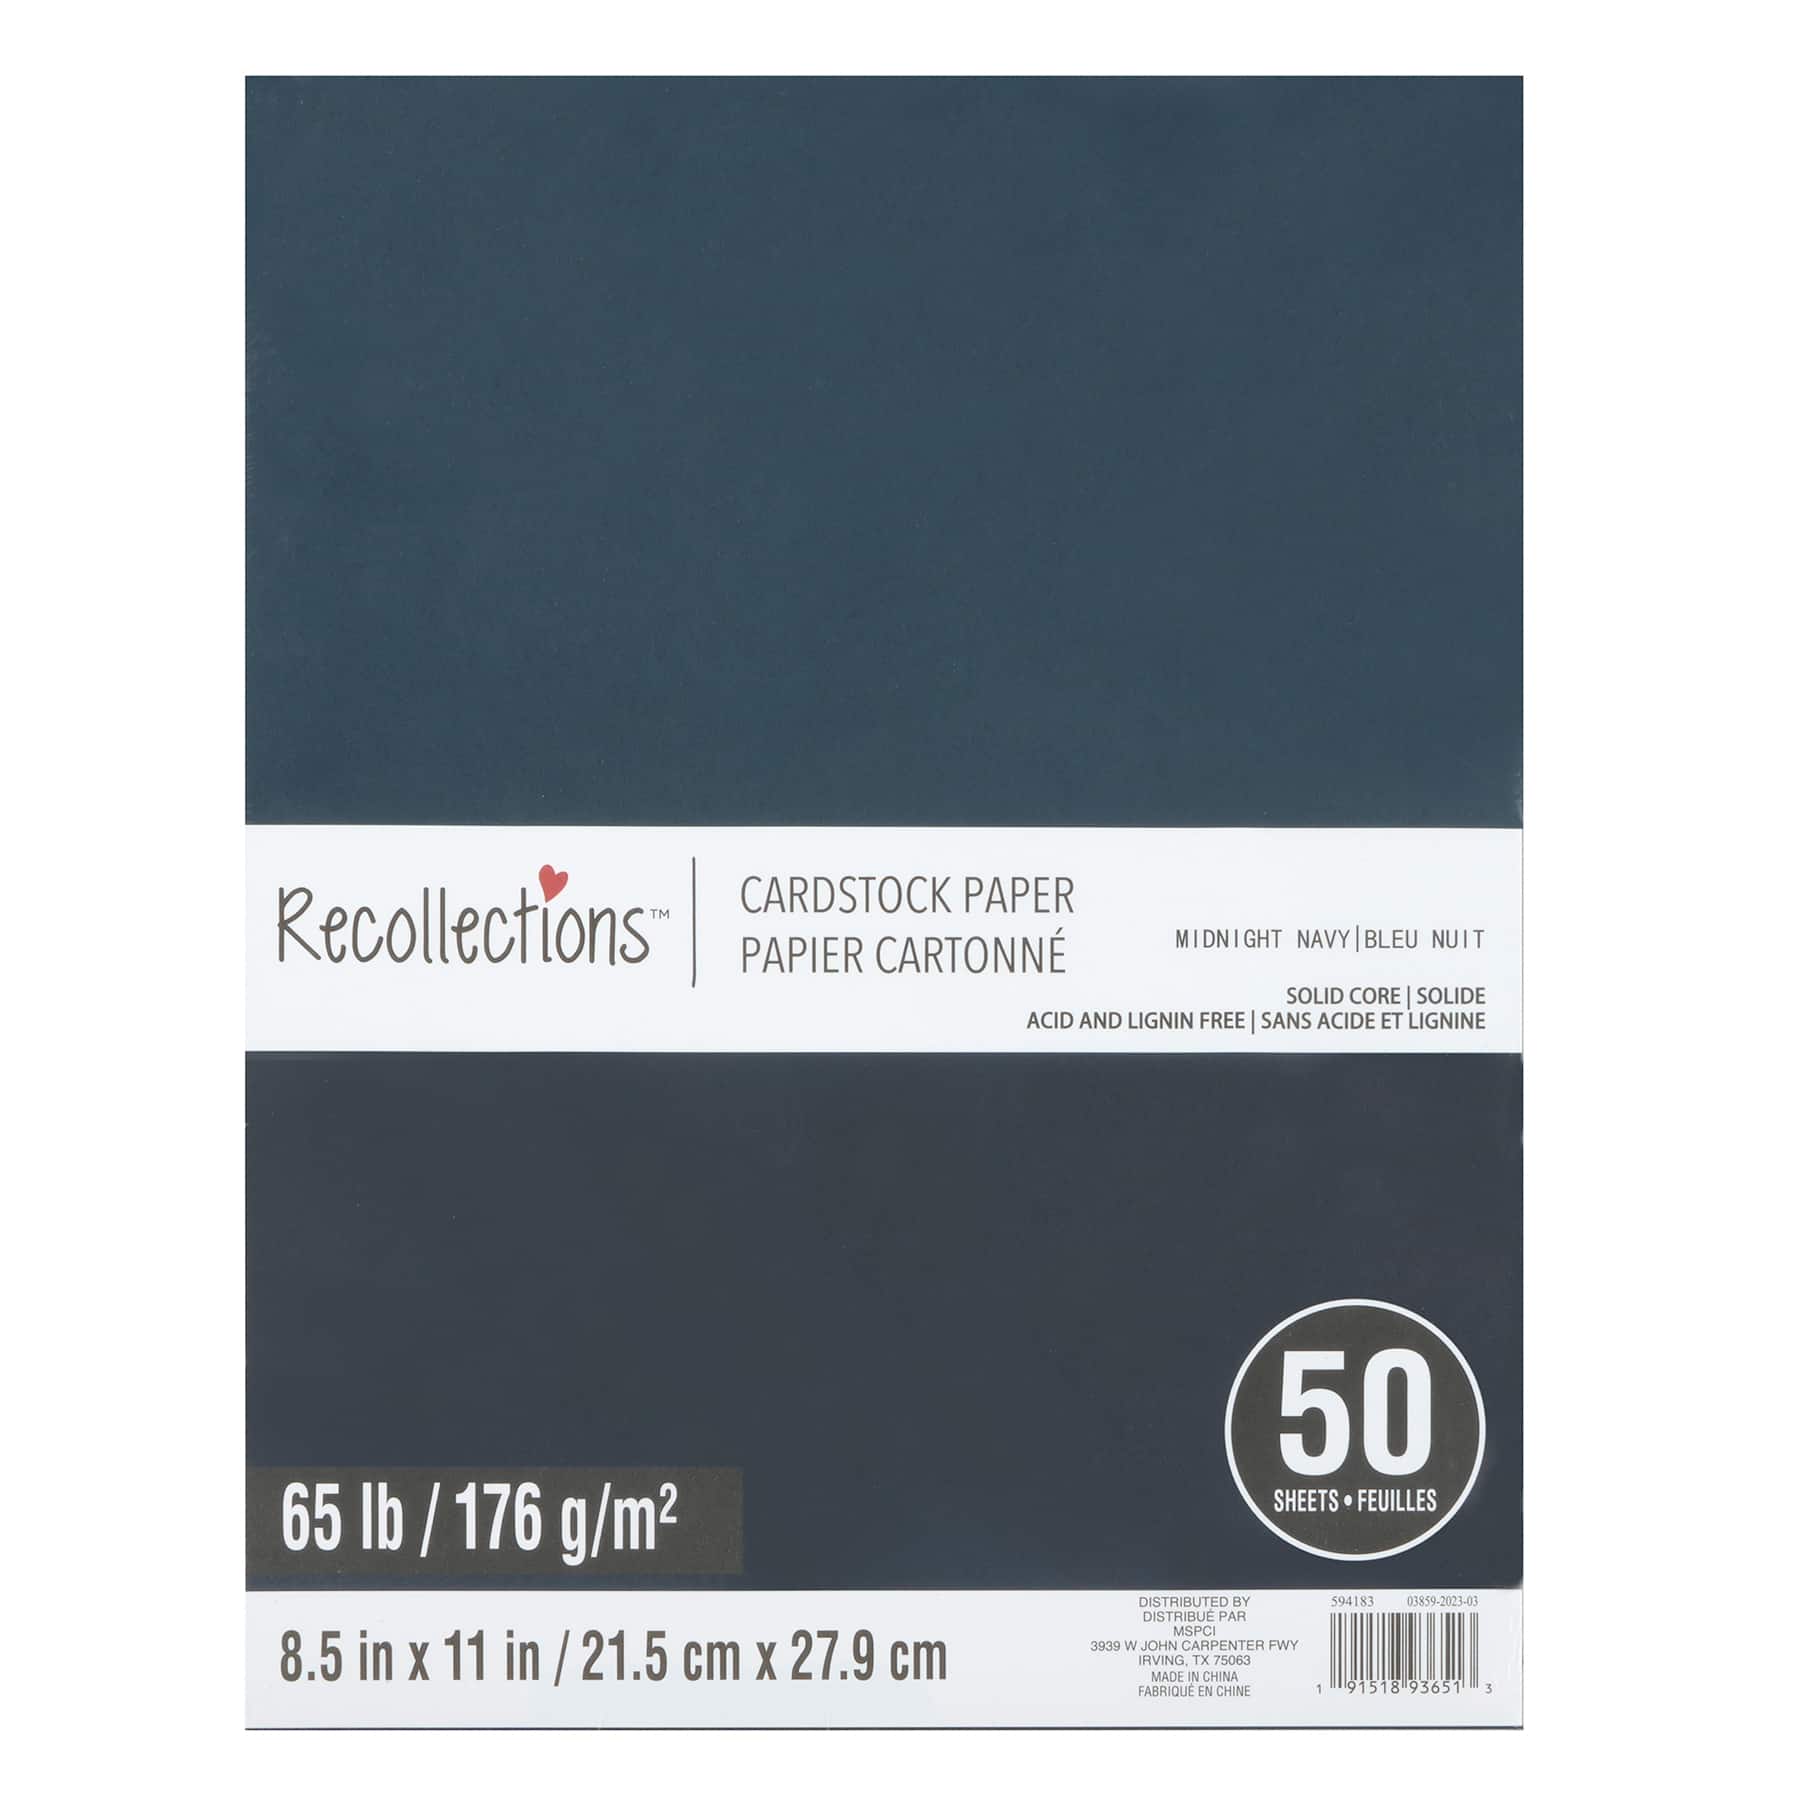  Cardstock Warehouse Pop Tone Red Hot Matte Premium Cardstock  Paper - 8.5 x 11 - 100 Lb. / 270 Gsm - 25 Sheets : Arts, Crafts & Sewing